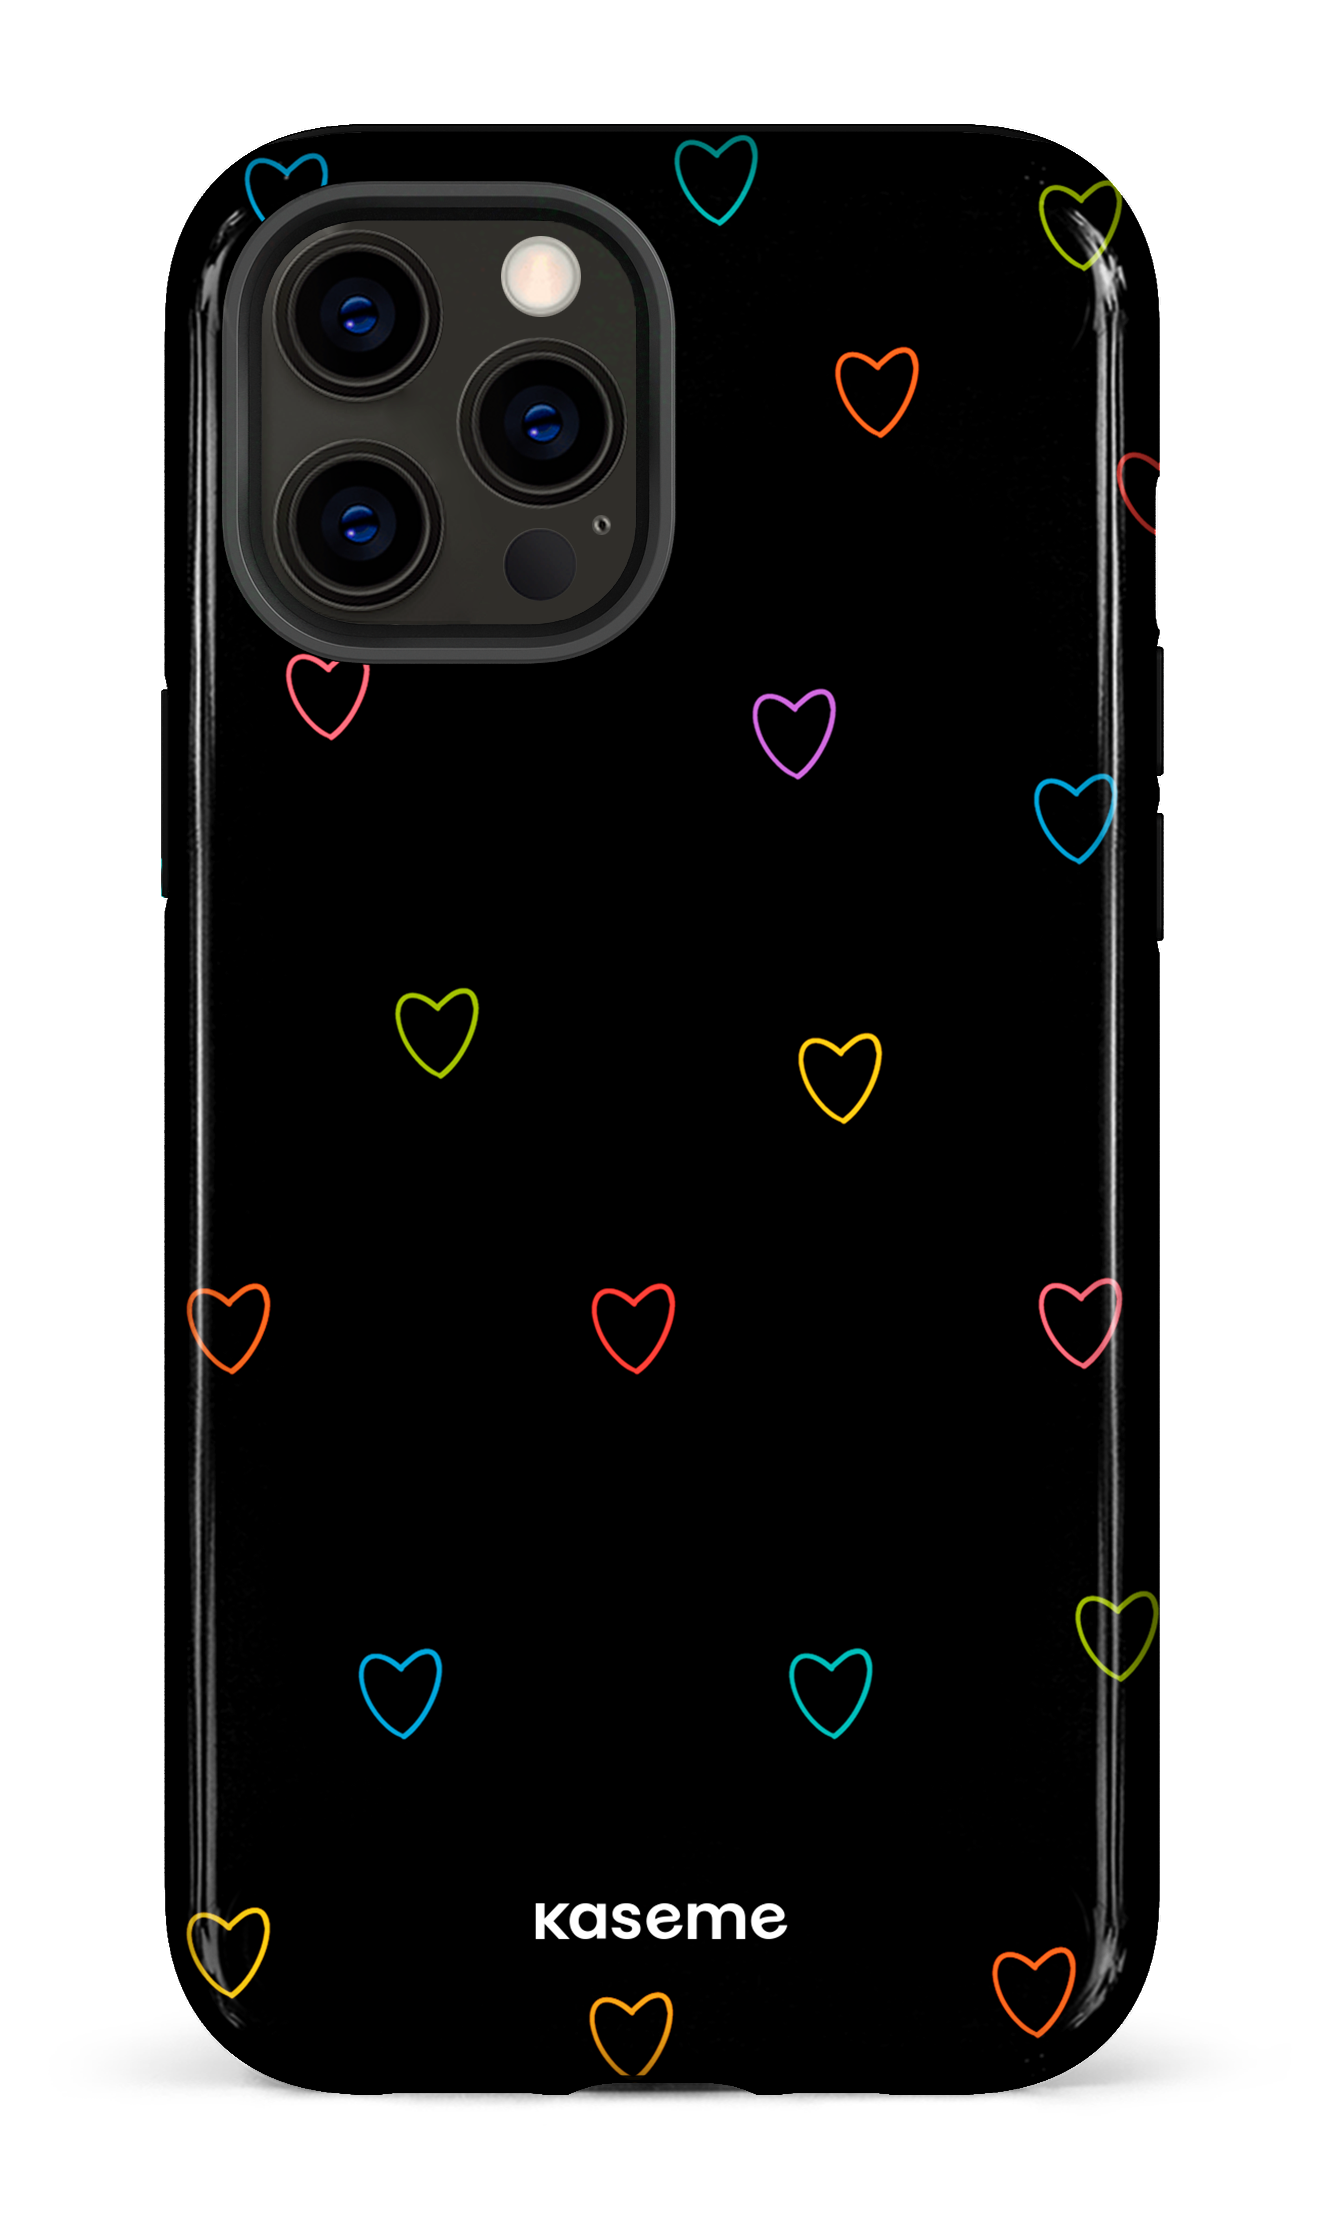 Love Wins - iPhone 12 Pro Max